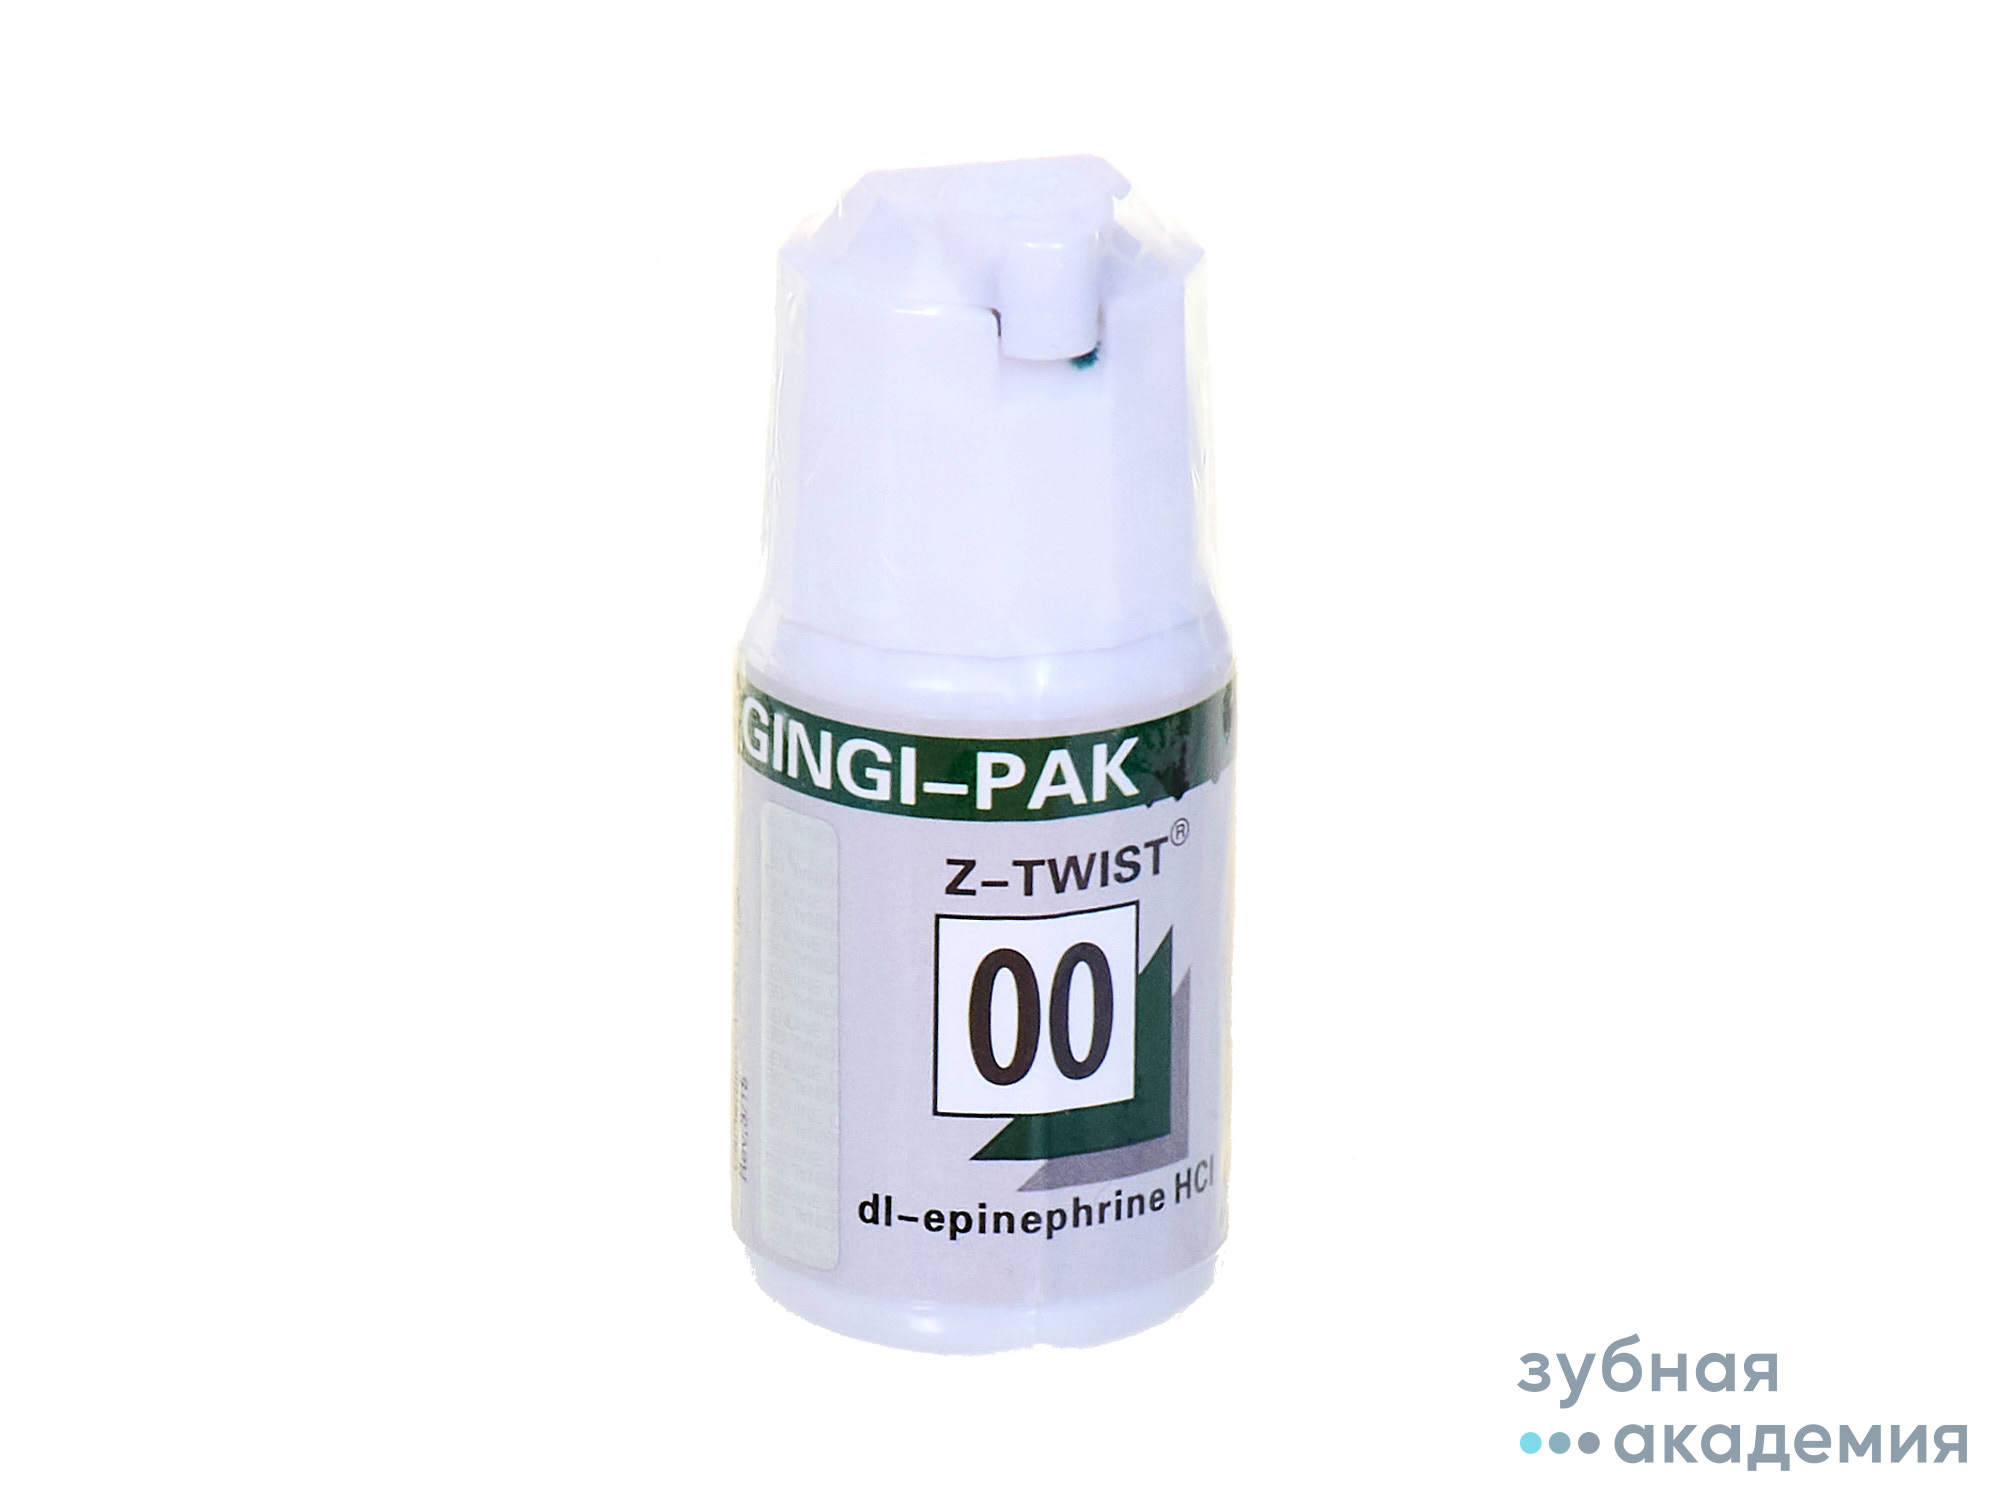 Ретракционная нить "Gingi Pak MAX" № 00 упаковка 2,74 м /Gingi Pak/ США